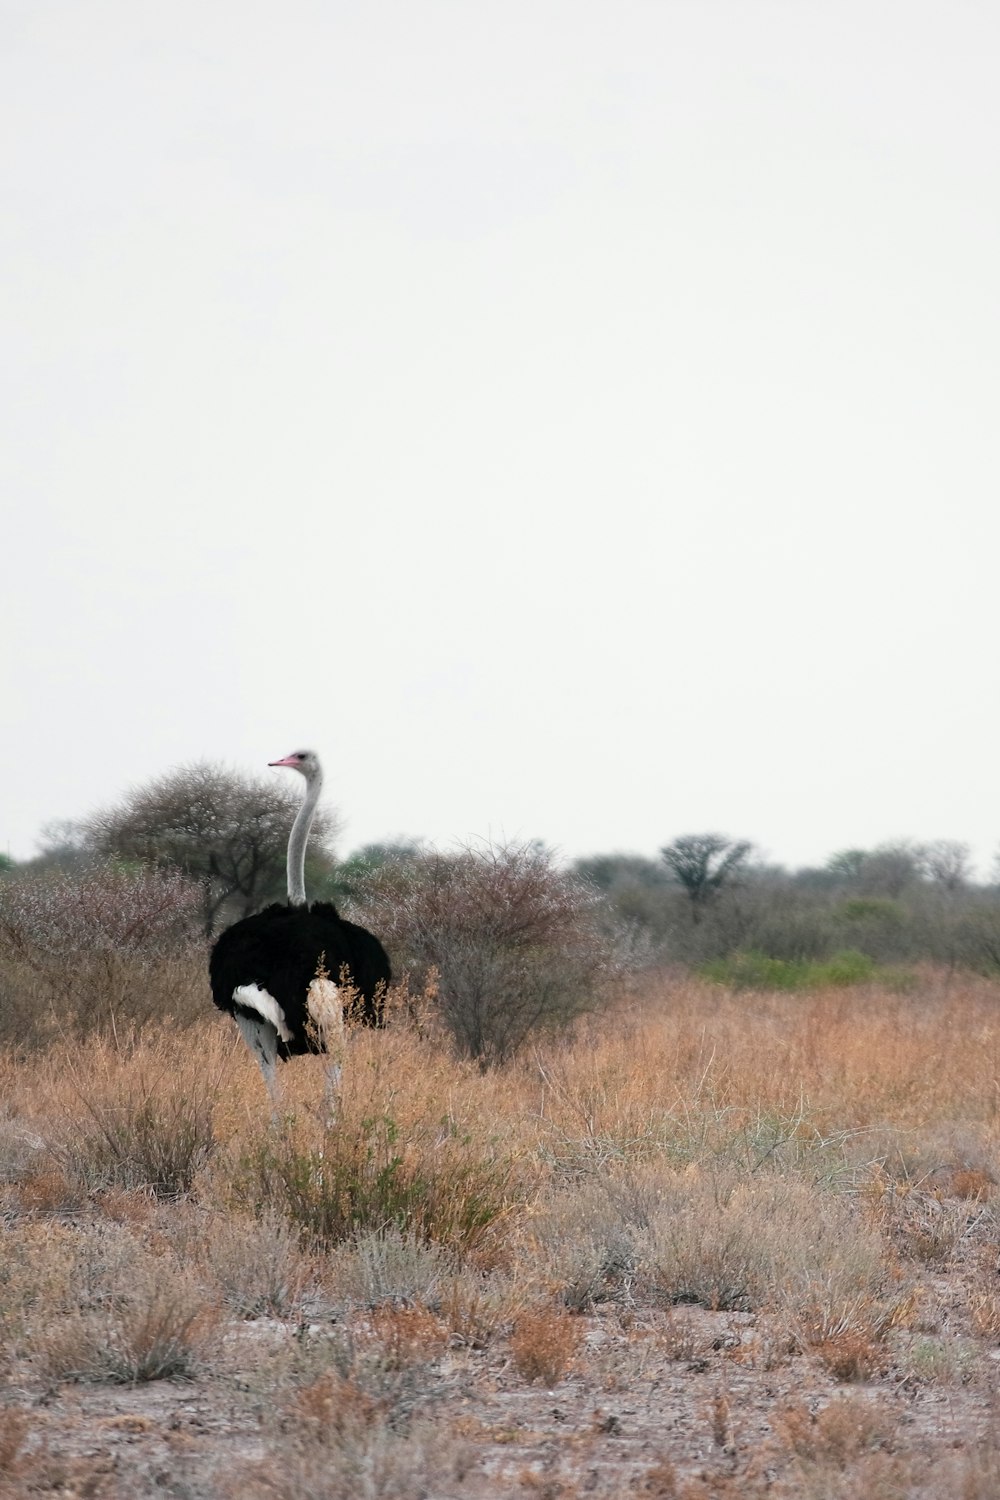 white ostrich on brown grass field during daytime